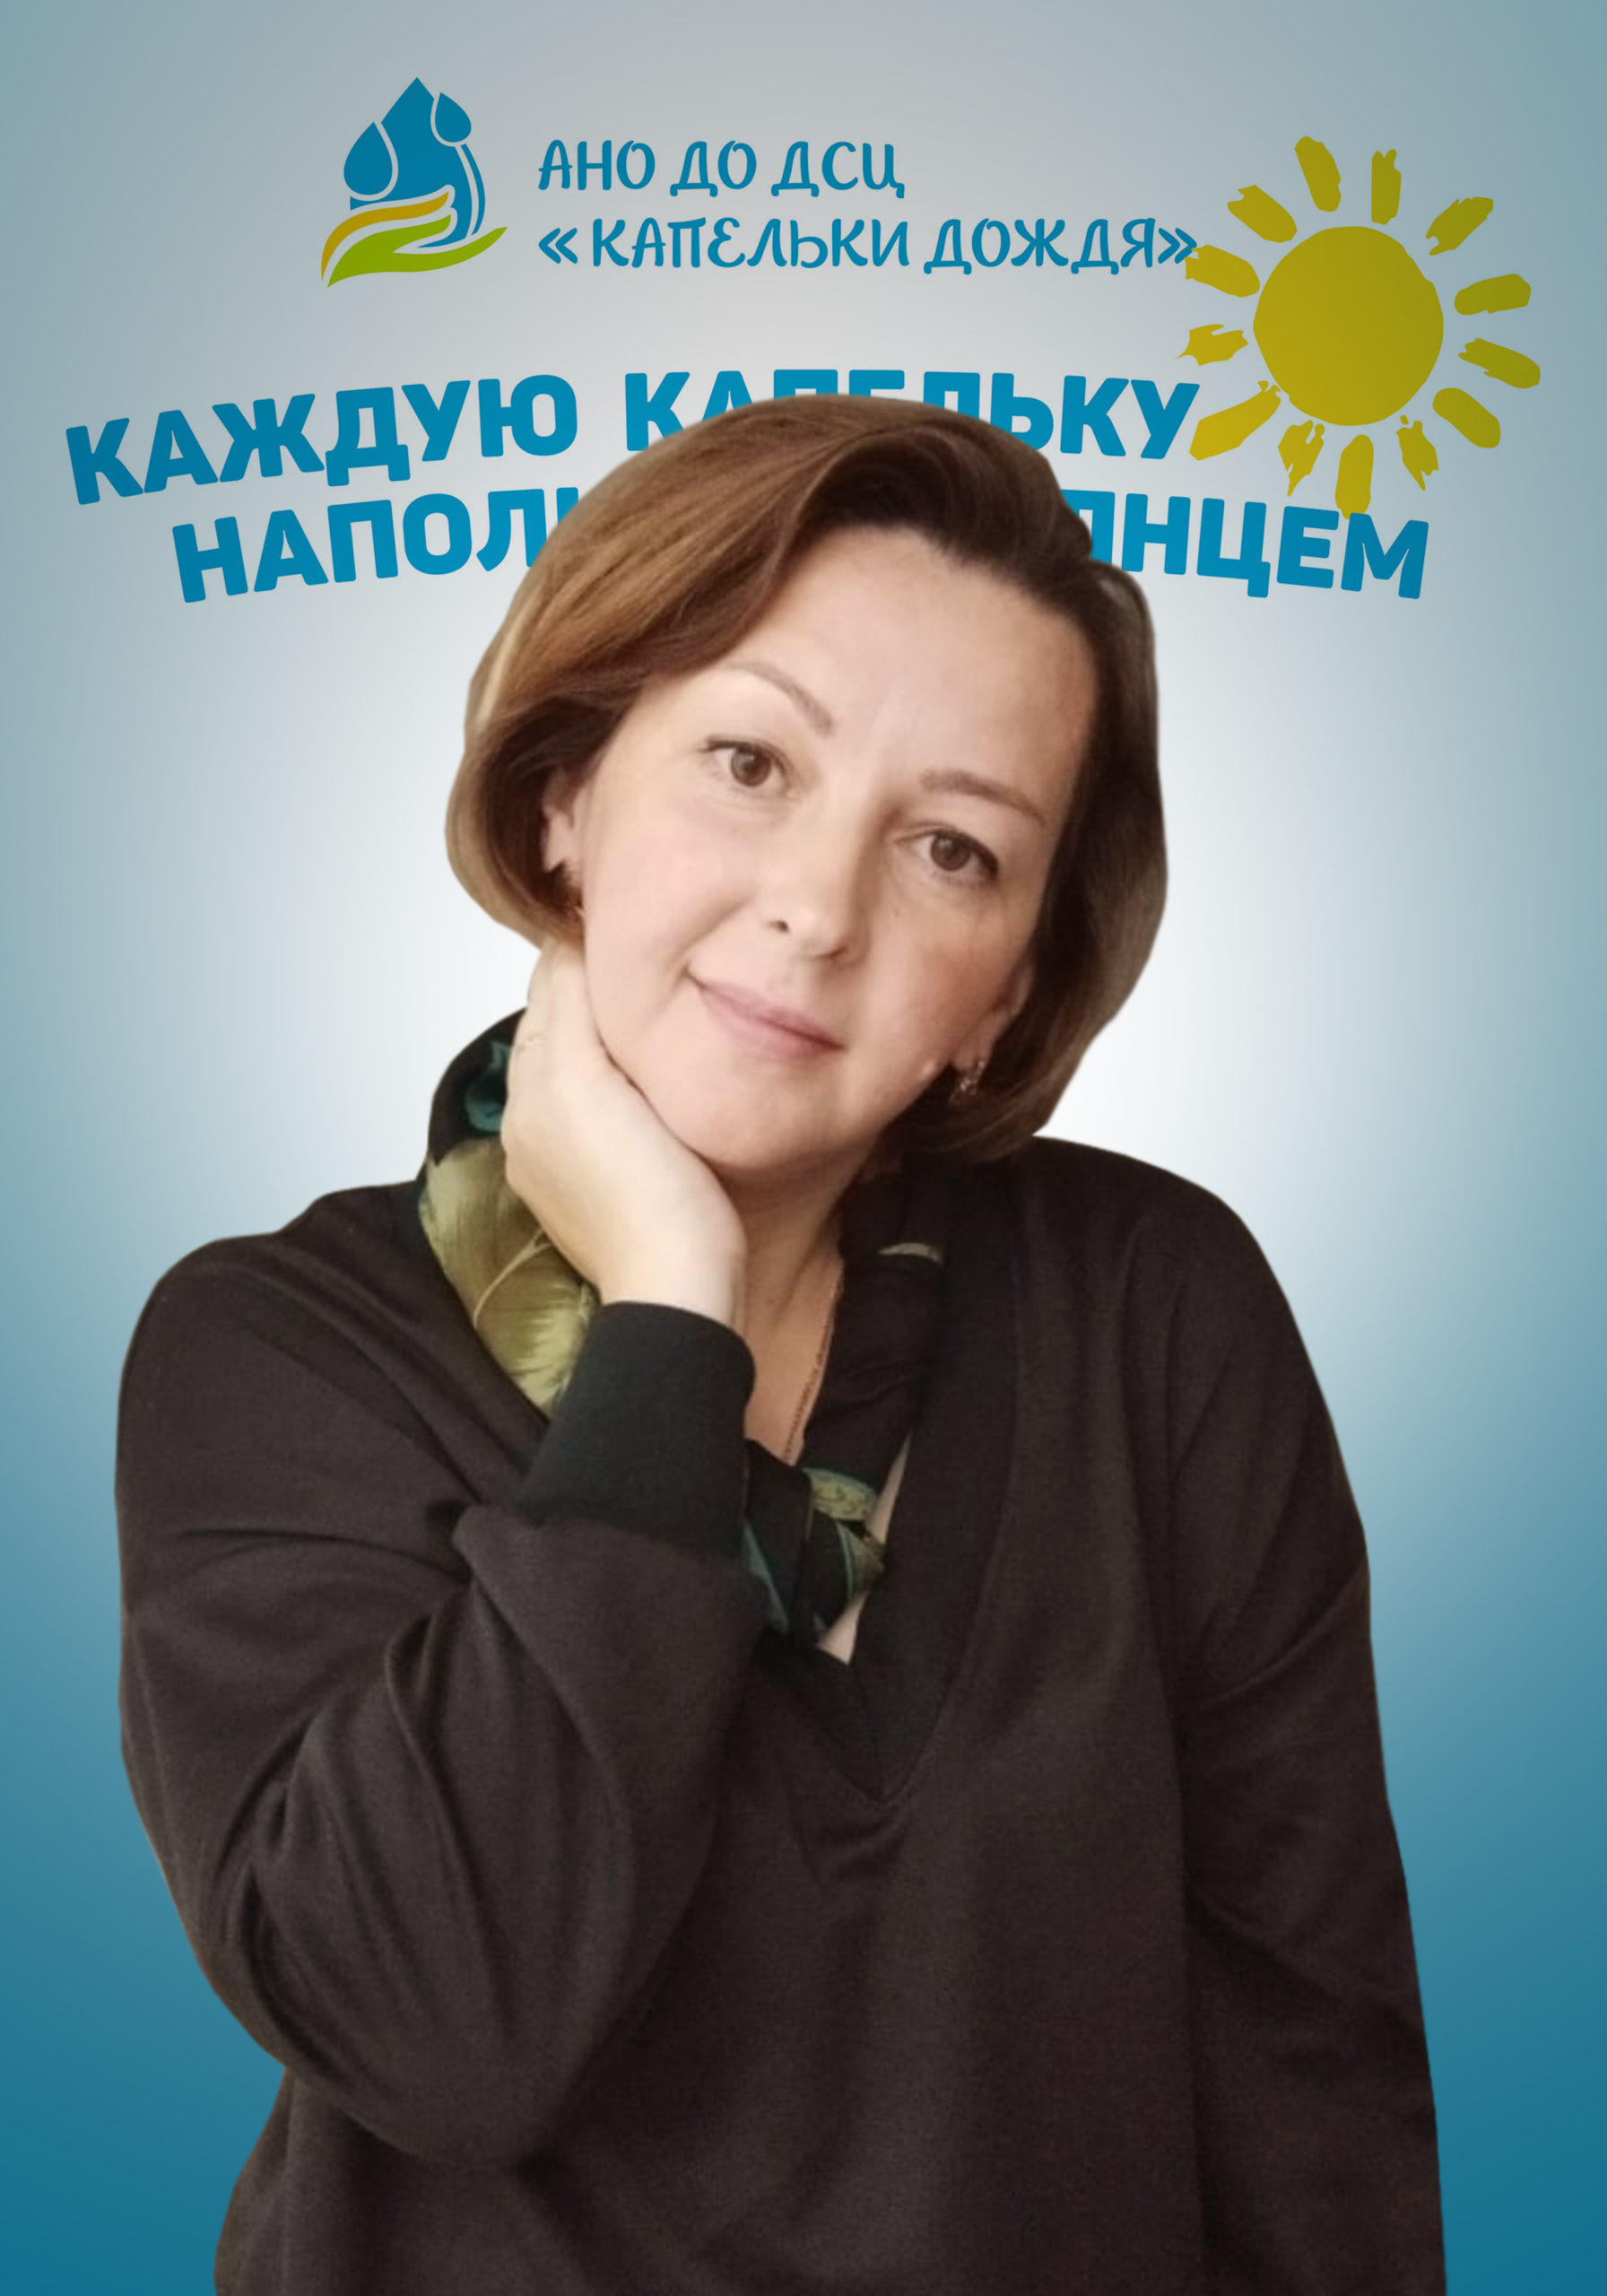 Демидова Алеся Владимировна